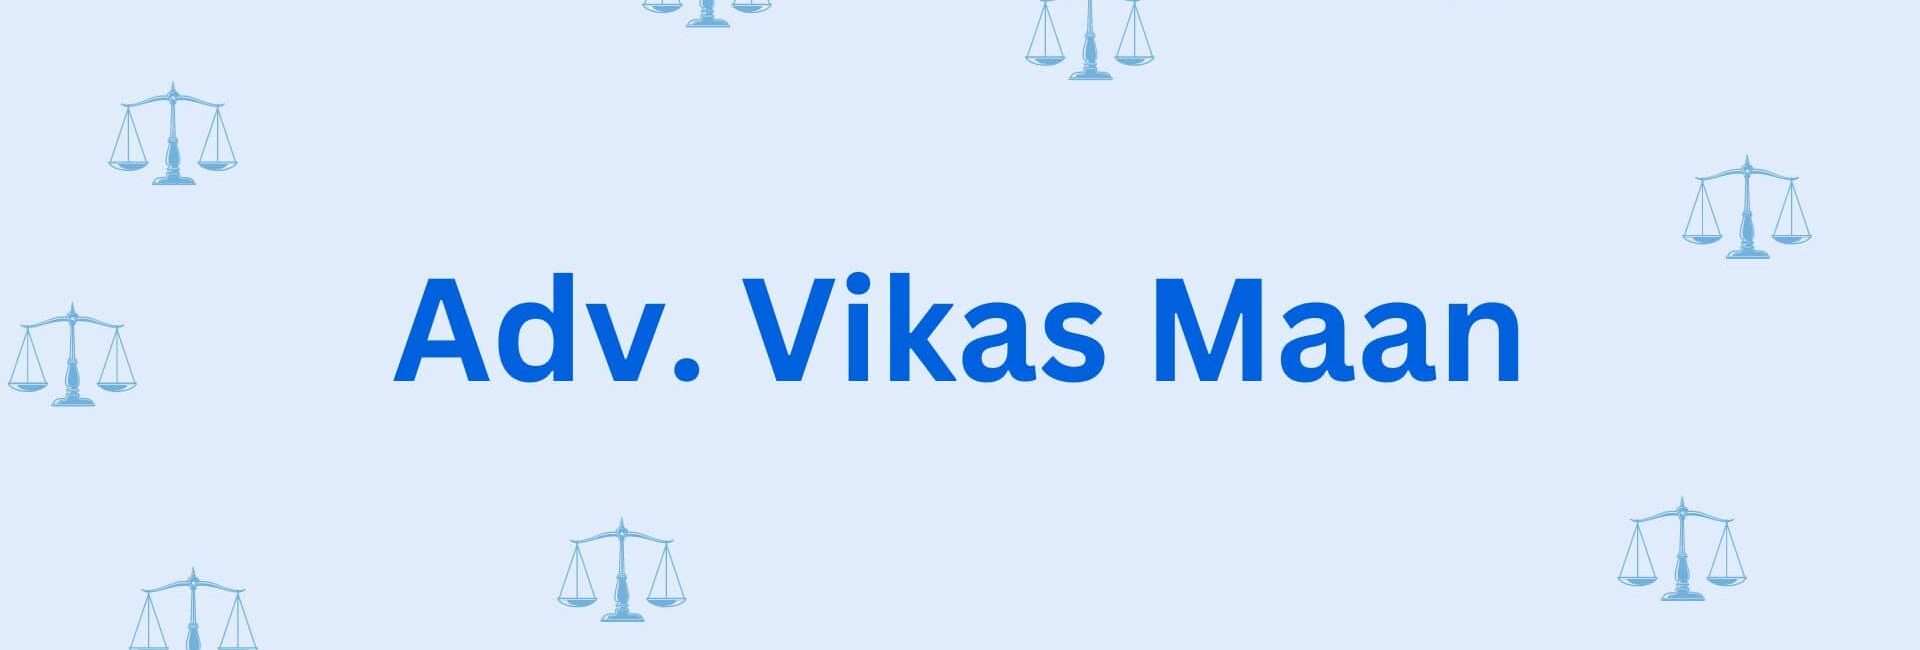 Adv. Vikas Maan - Legal Service Provider In Hisar